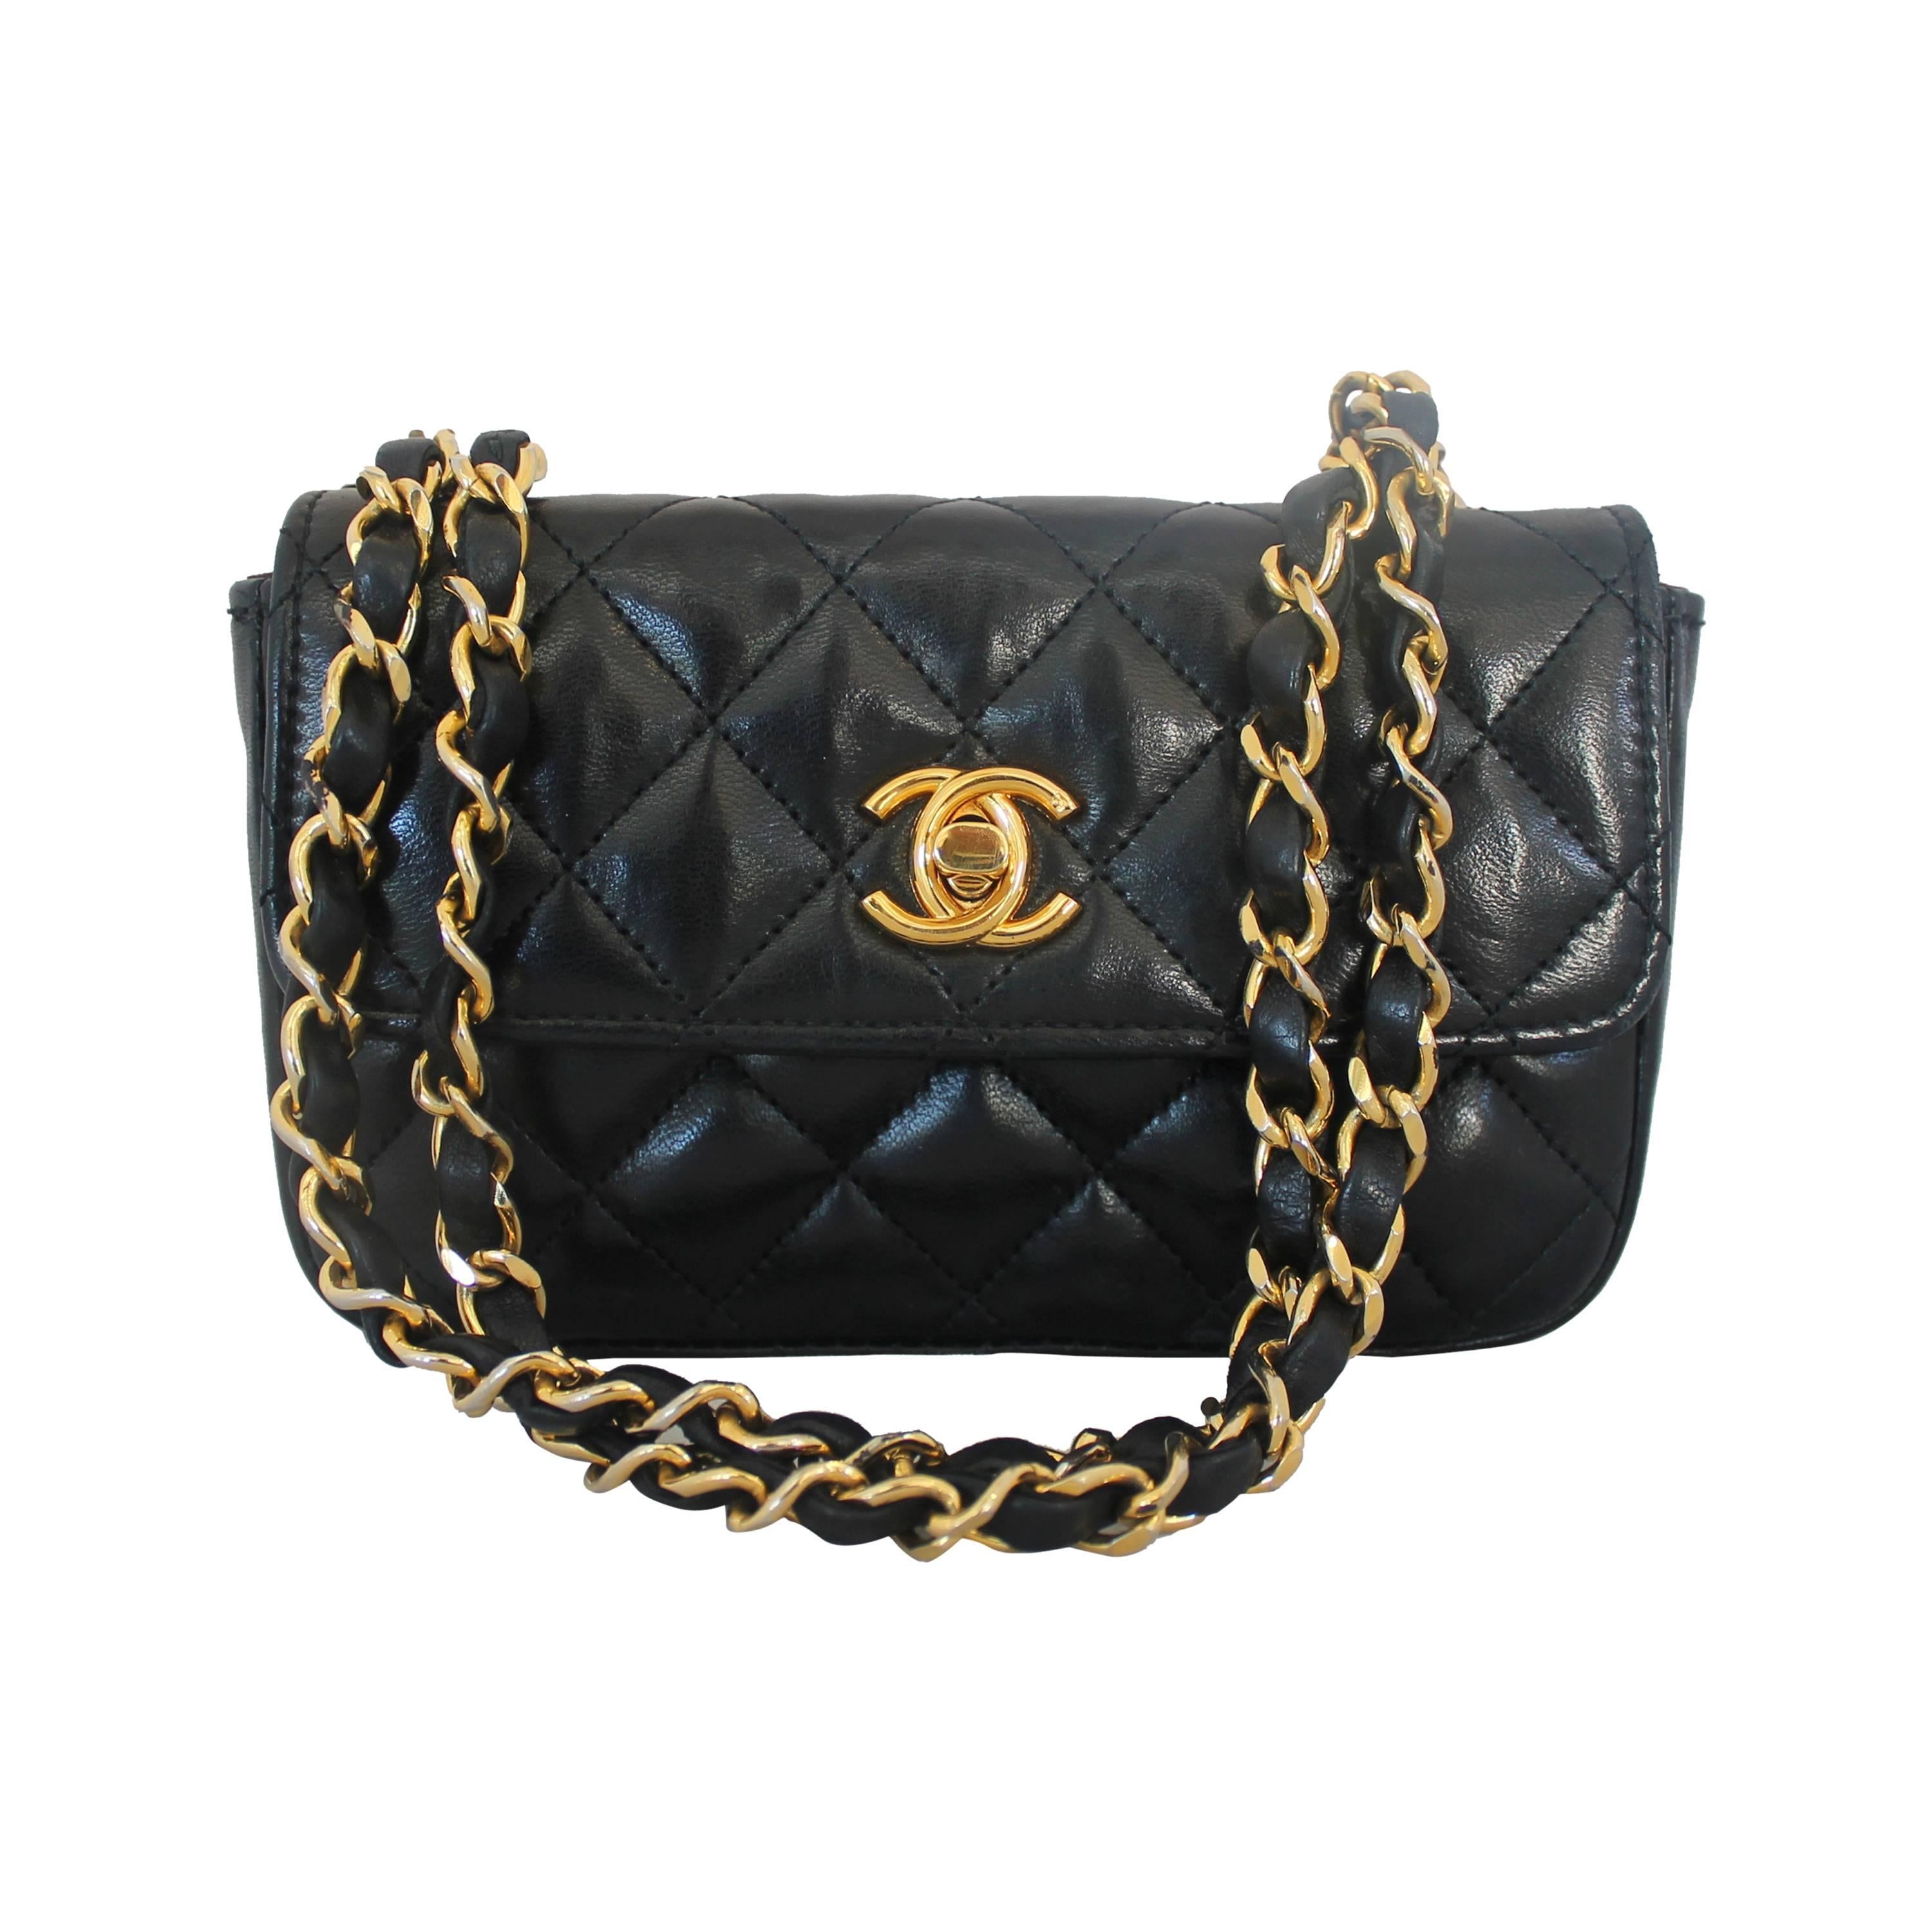 Chanel 1986 Vintage Black Quilted Lambskin Mini "Classic" Handbag - GHW